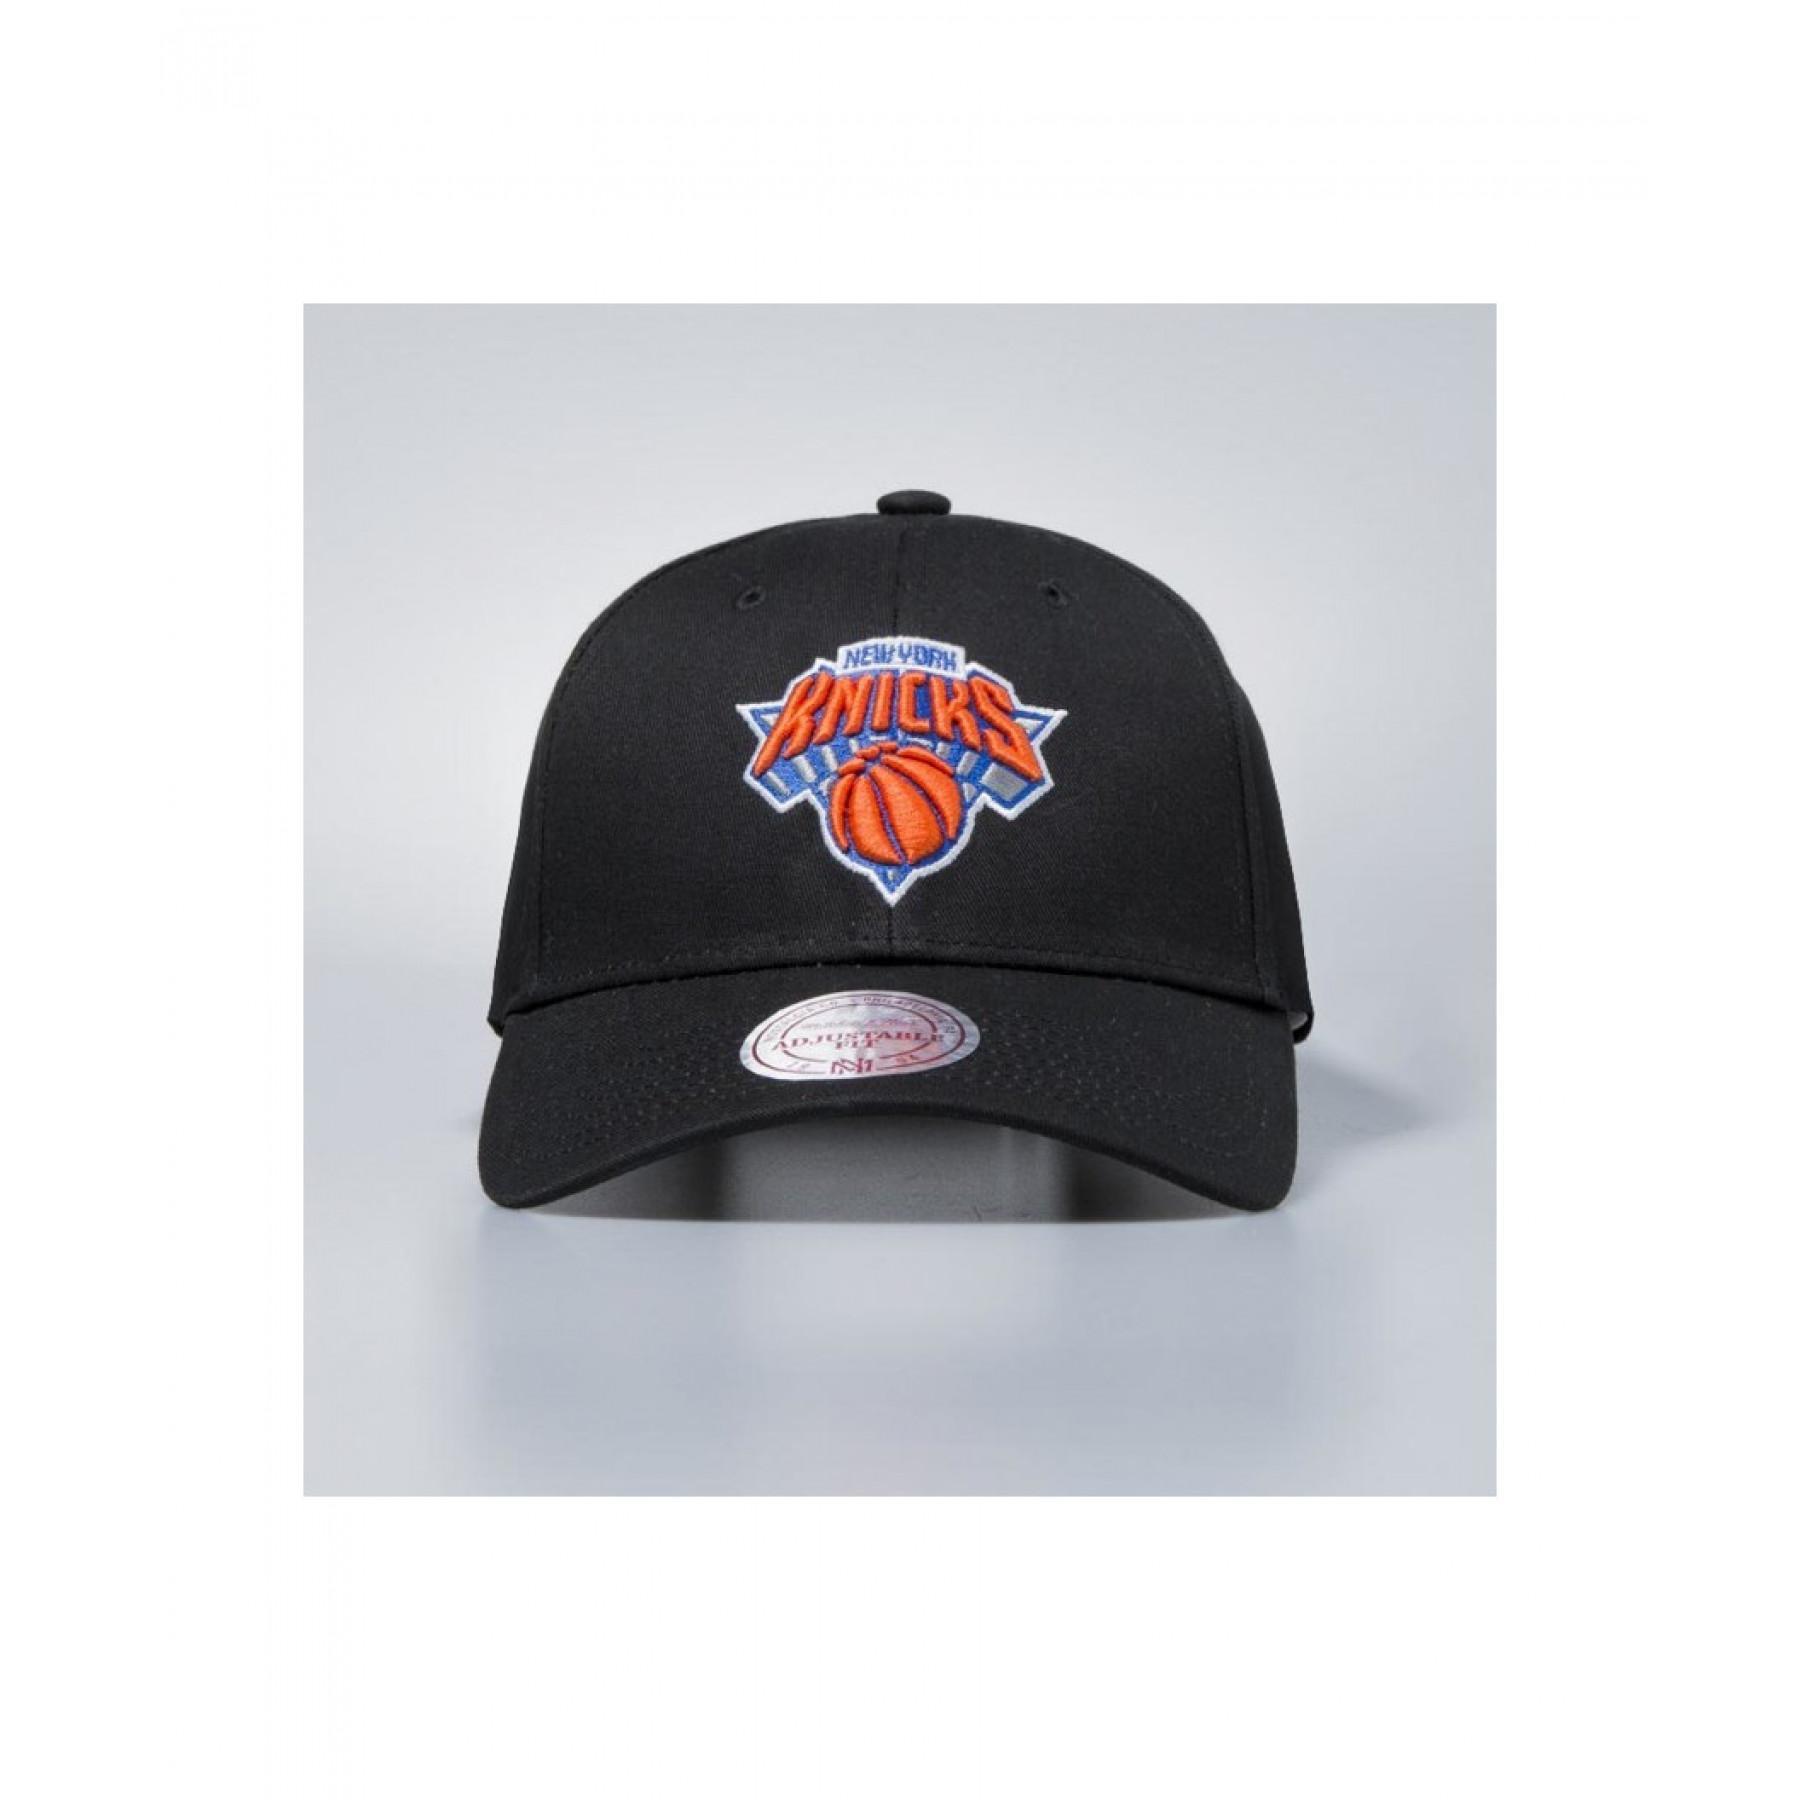 Pet New York Knicks team logo